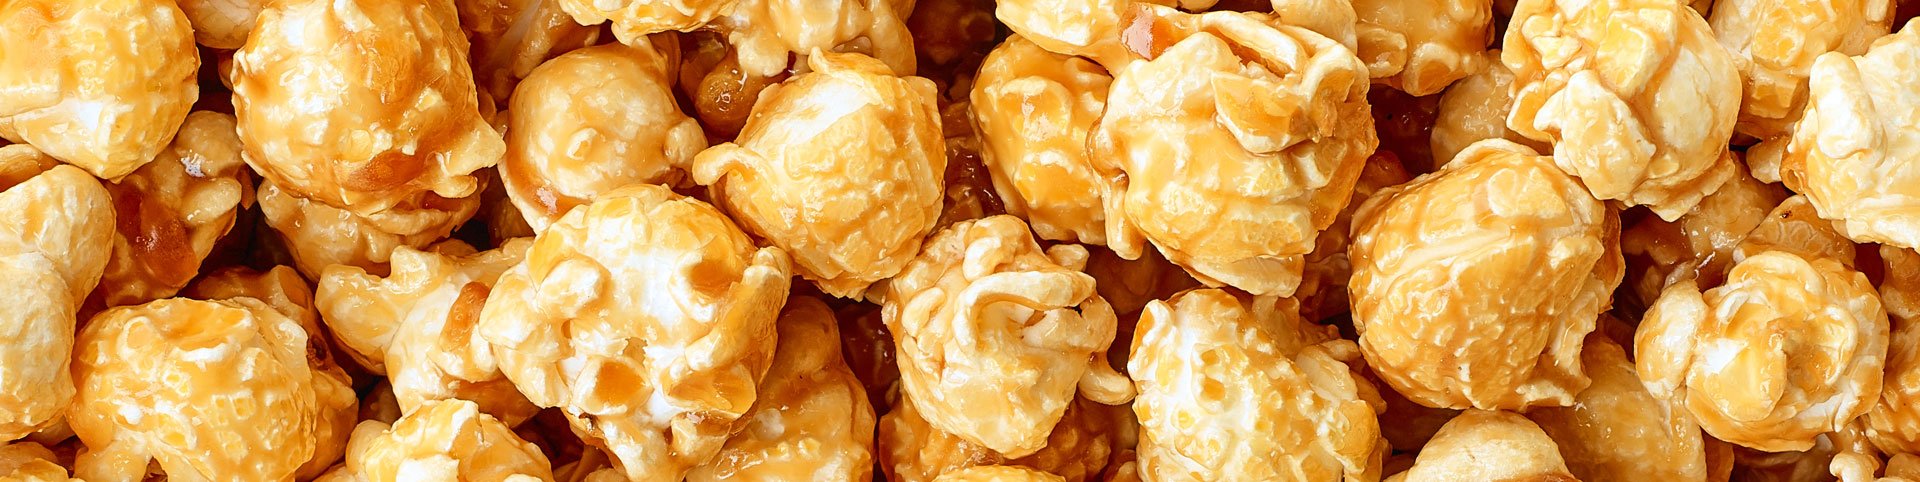 The History of Caramel Popcorn